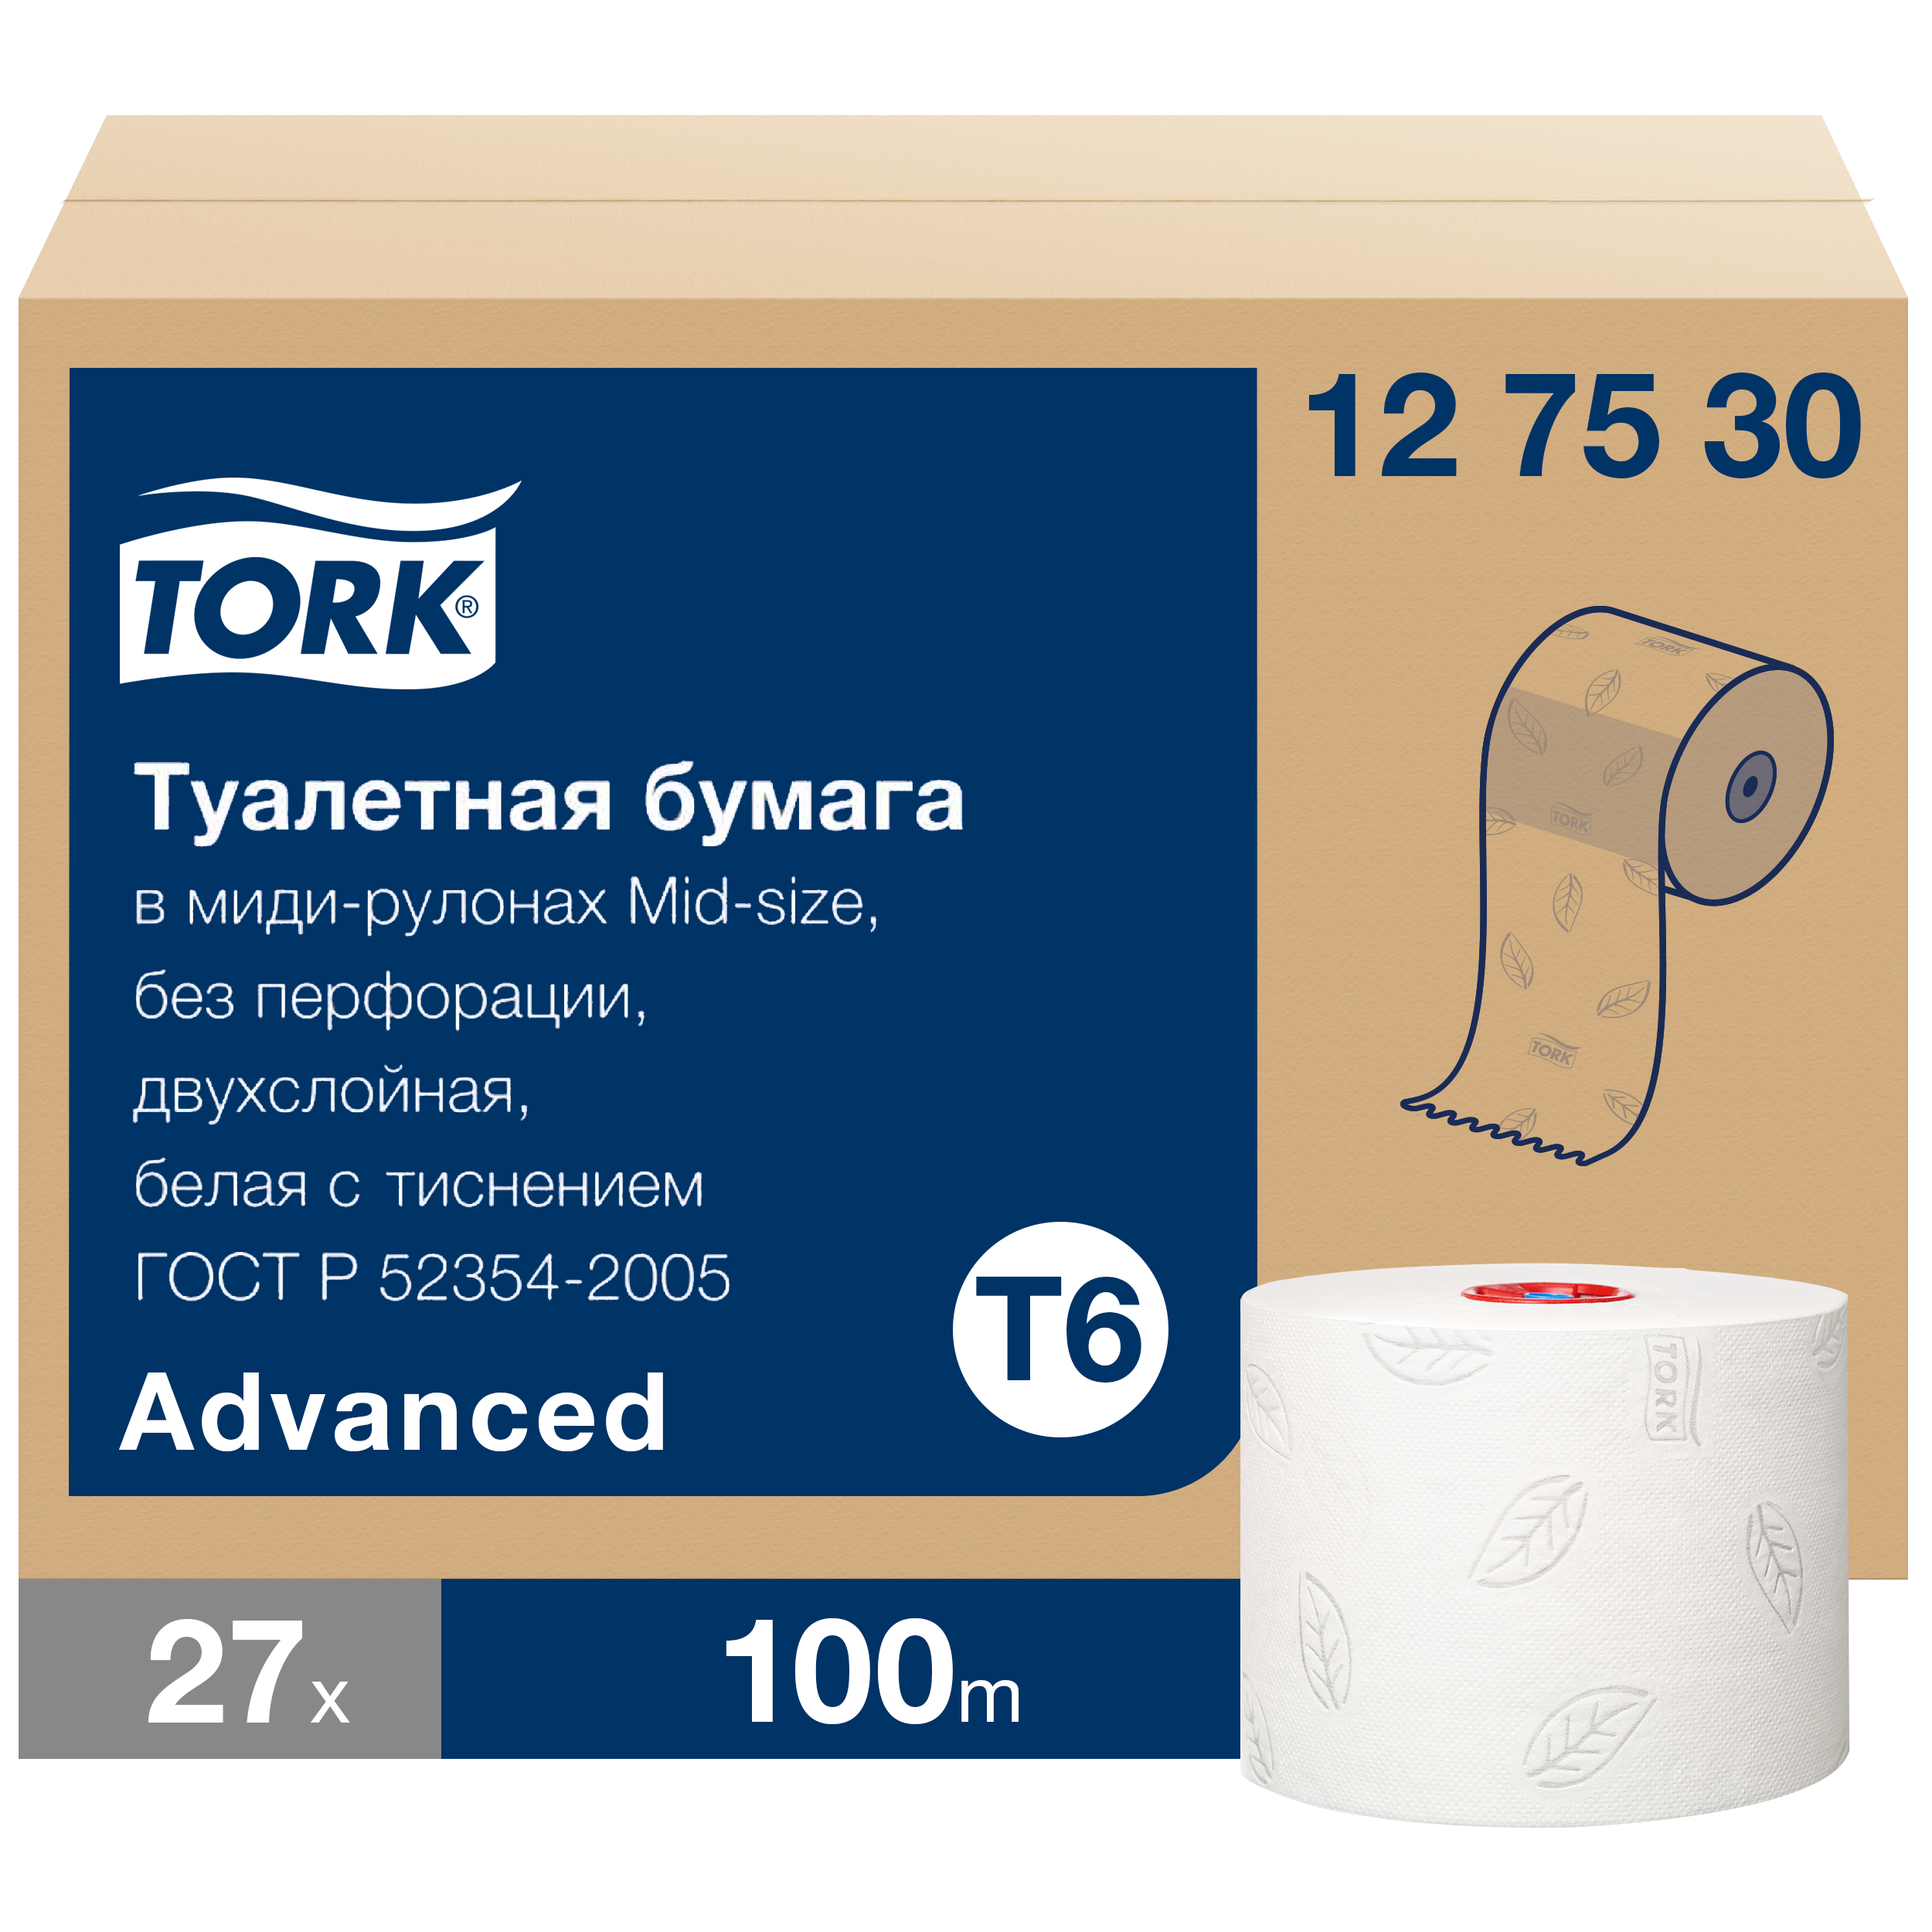 Бумага туалетная Tork Mid-size Advanced в рулонах, T6, 2 слоя, 100м, 27 рулонов туалетная бумага tork smartone в мини рулонах 472261 t9 2 слоя белая 130м 12 рул кор